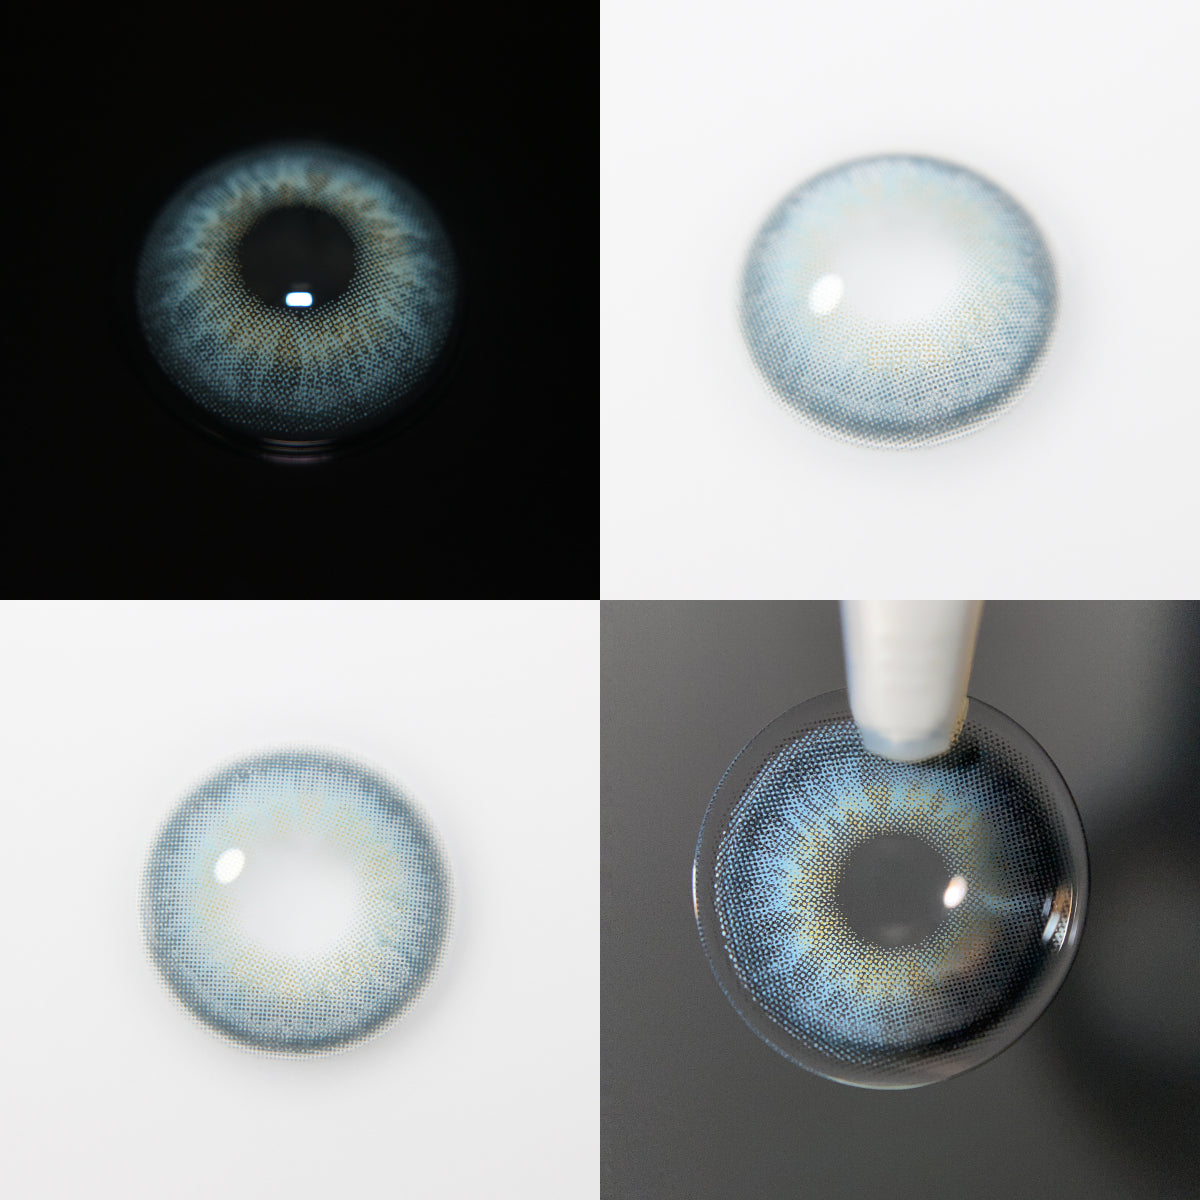 Bloom Blue Contact Lenses(12 months wear)